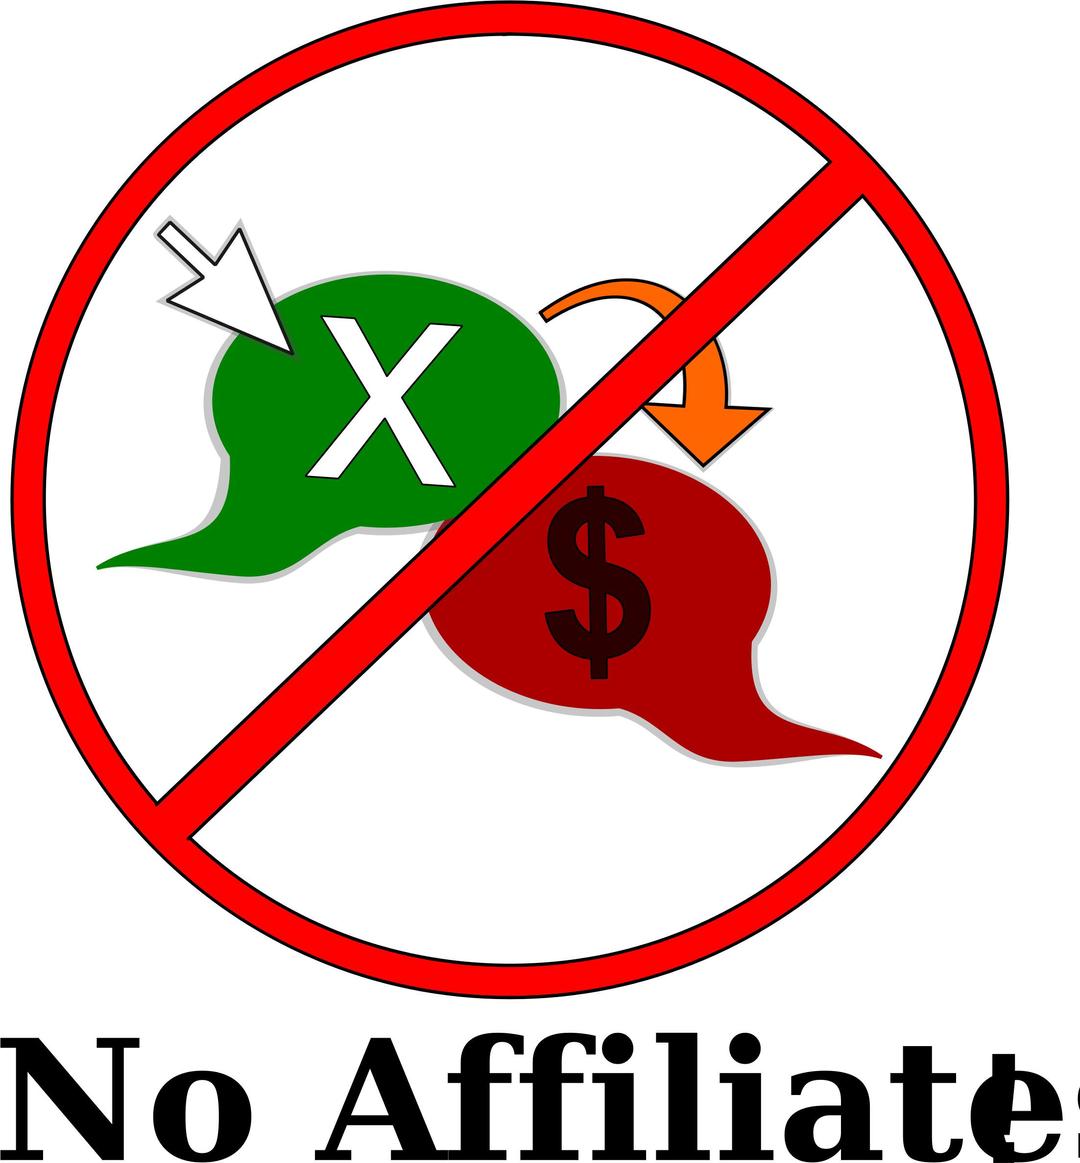 Anti advertising/affiliate logo sign png transparent